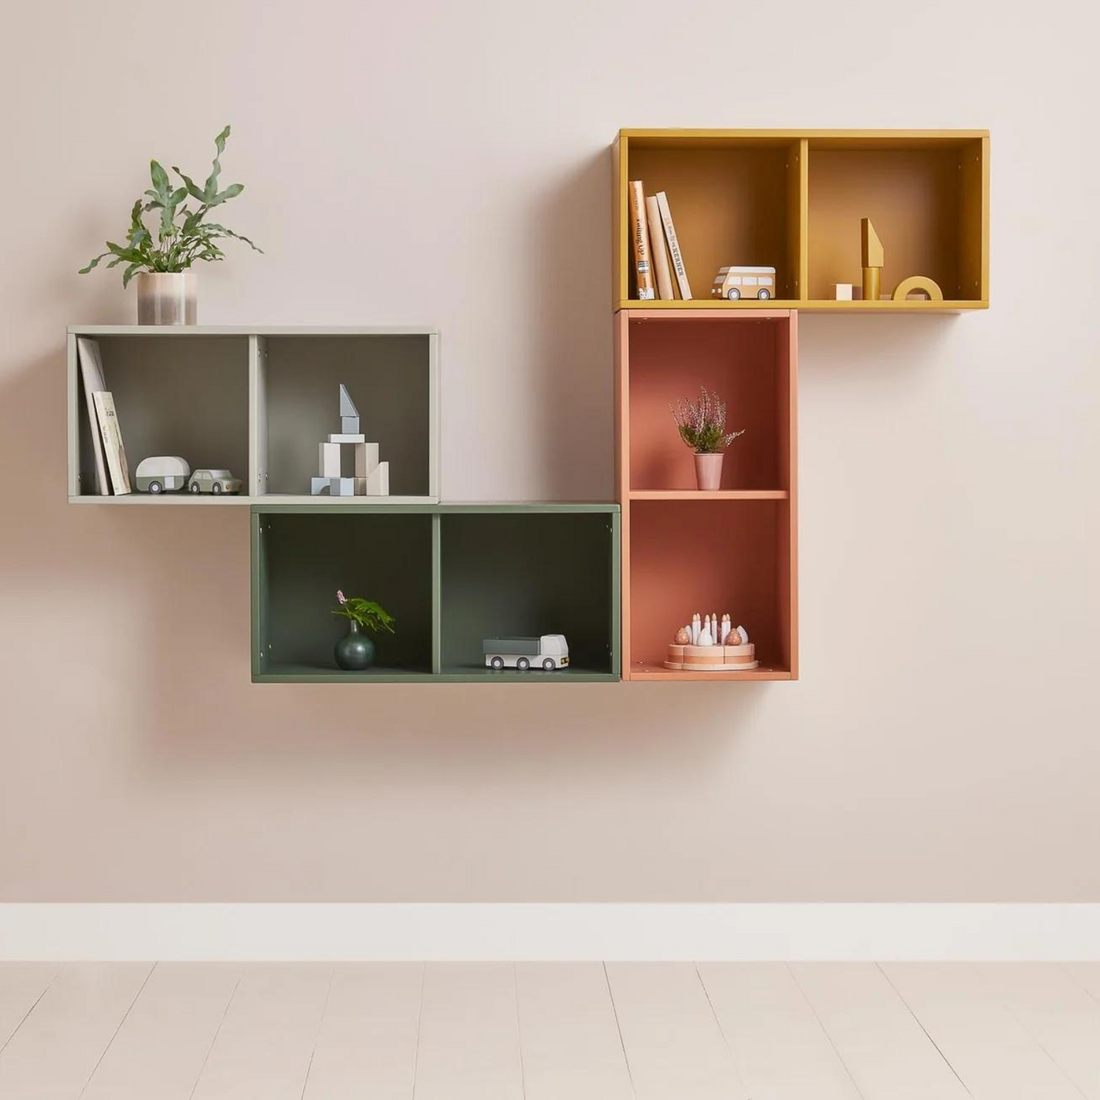 FELXA Bookcase in Multiple colors example